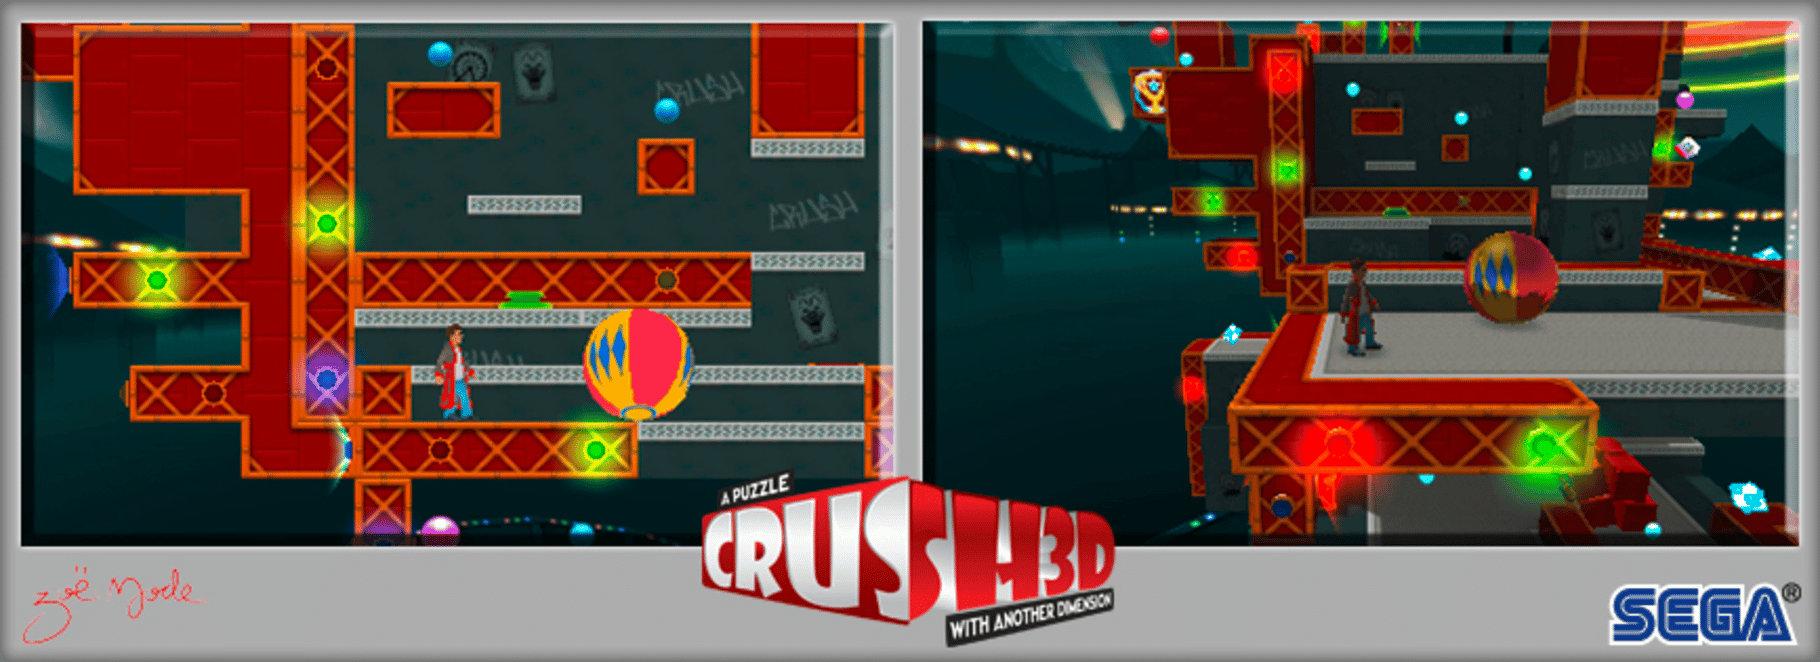 Crush3D screenshot